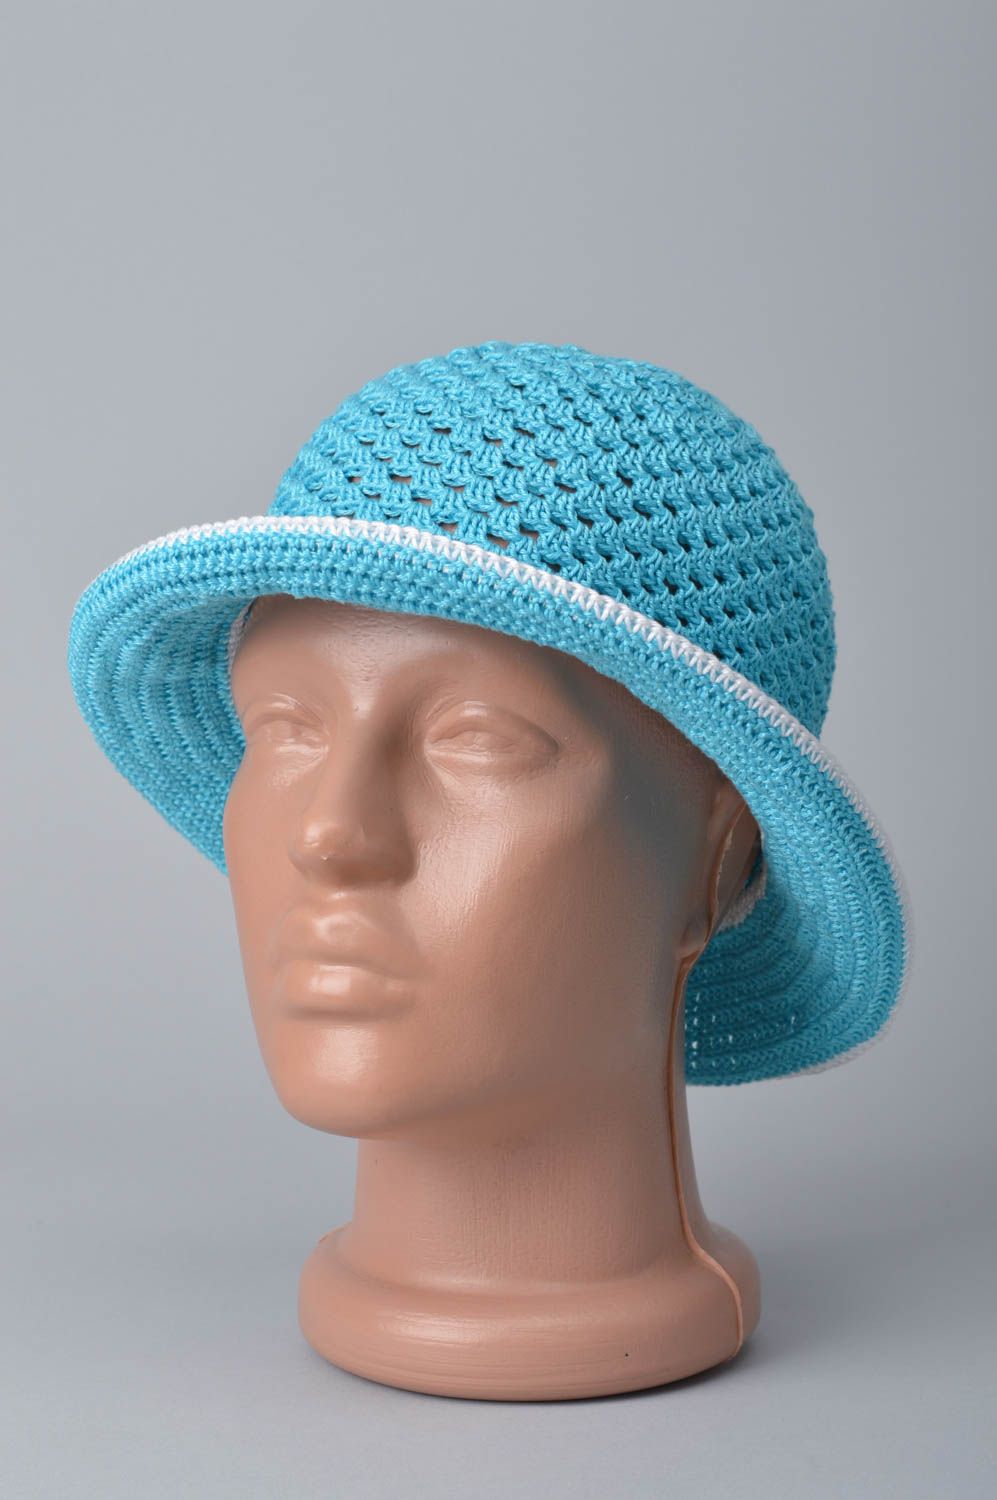 Unusual handmade crochet hat crochet ideas accessories for girls cute hats photo 1